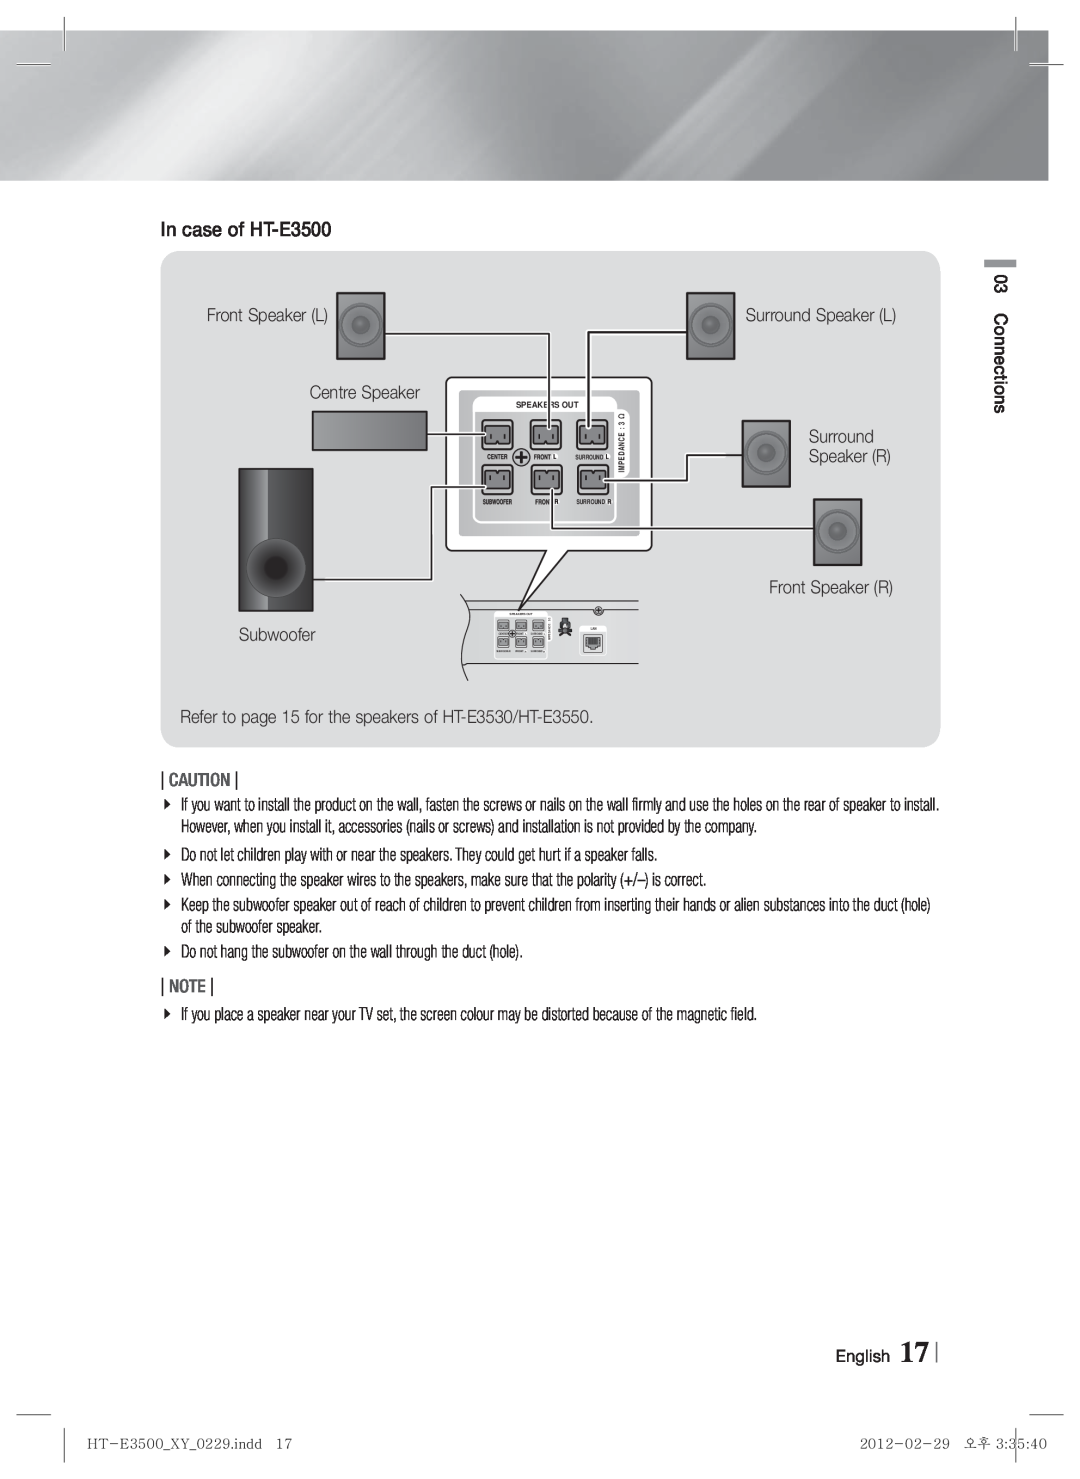 Samsung HT-E3530, HT-E3550 user manual In case of HT-E3500, Subwoofer 